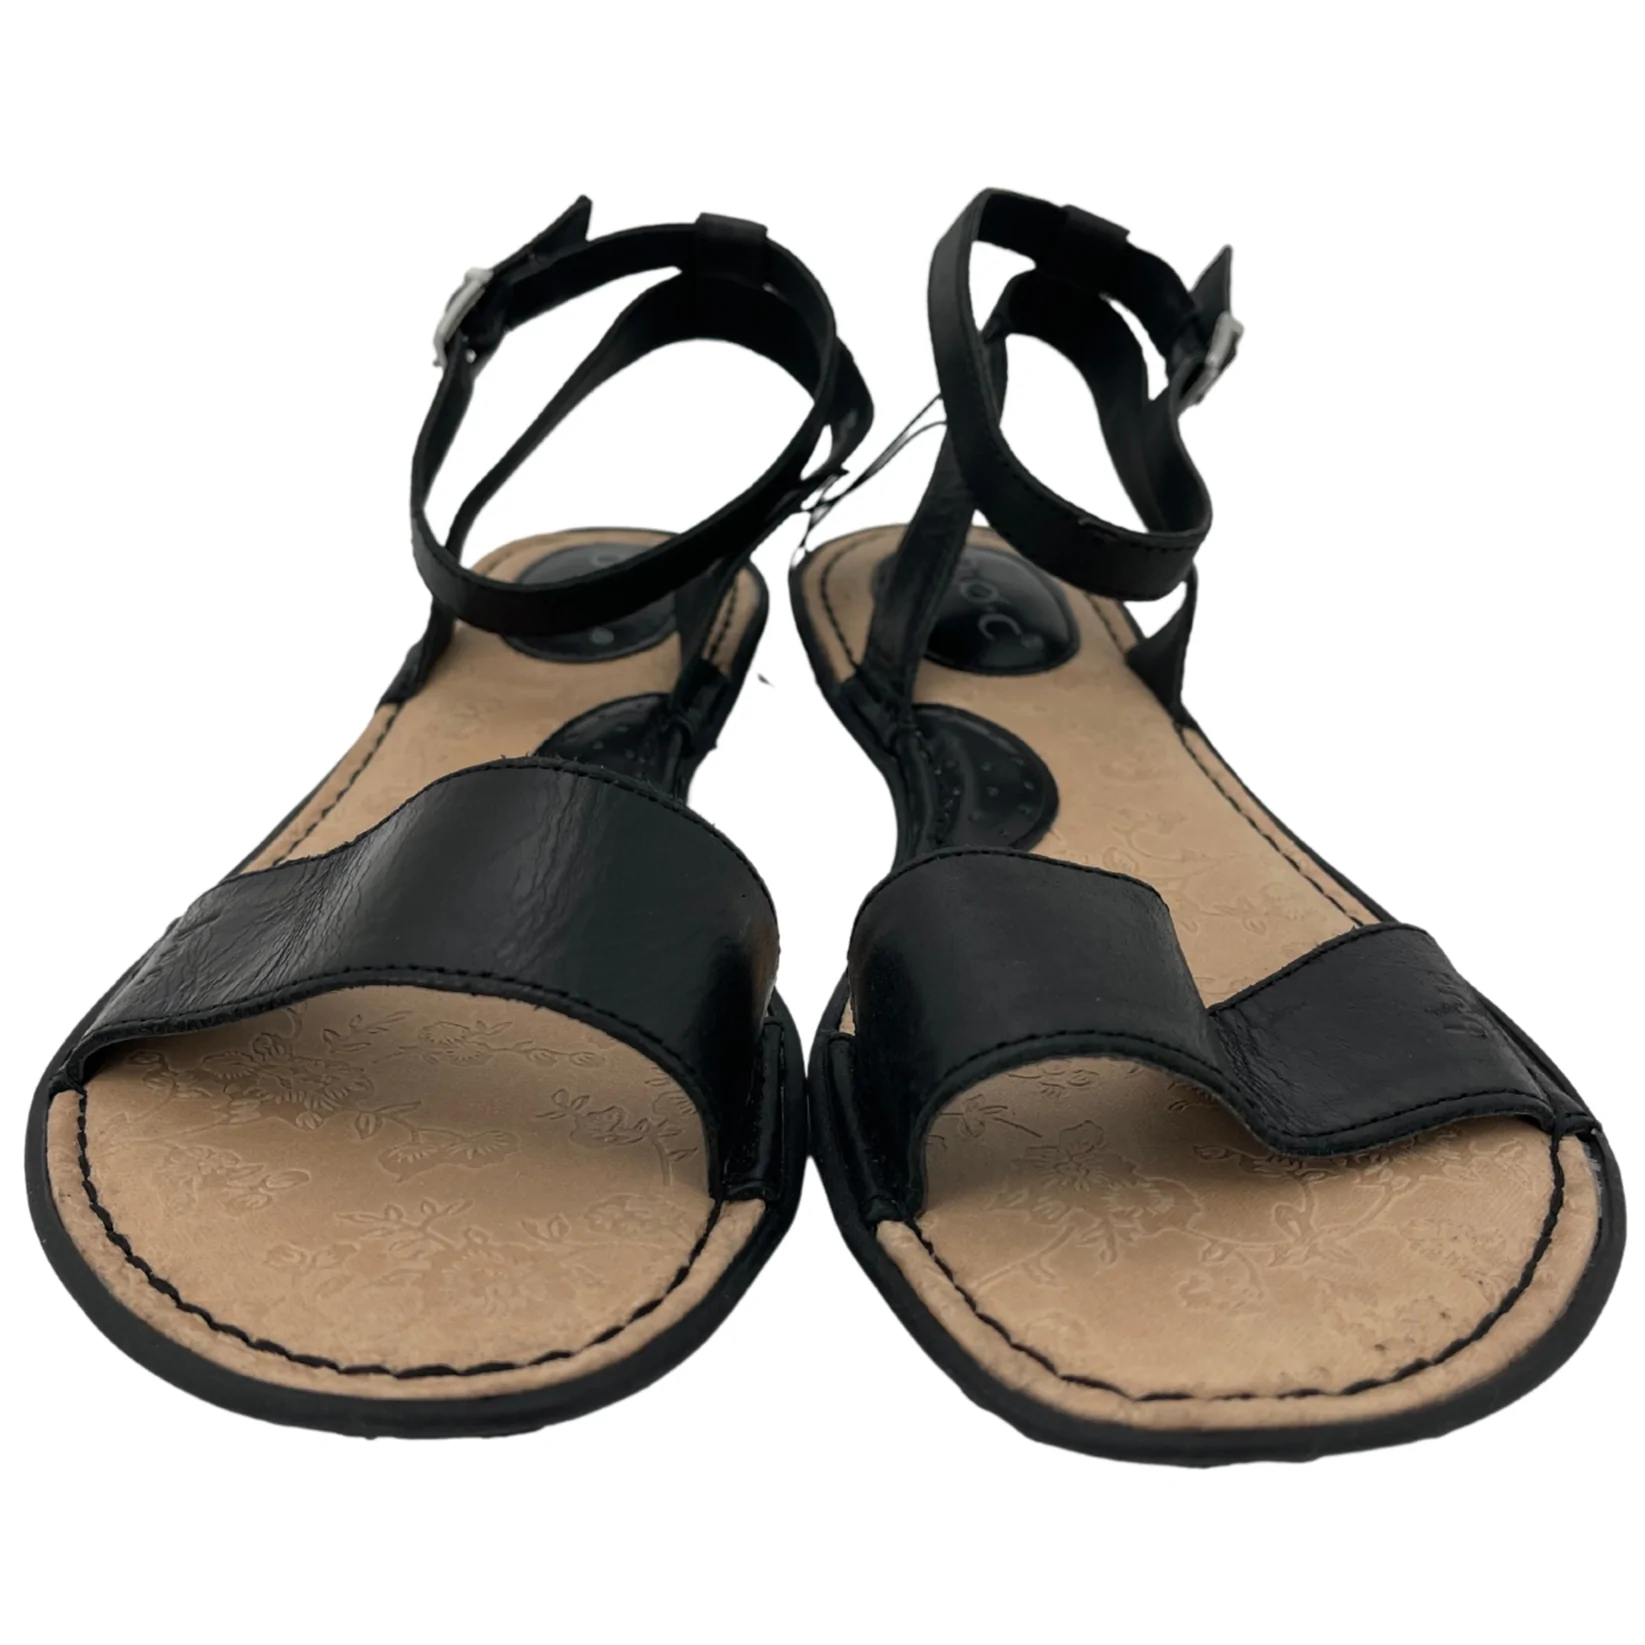 BOC Women's Sandals / Strappy Summer Shoes / Black / Size 7